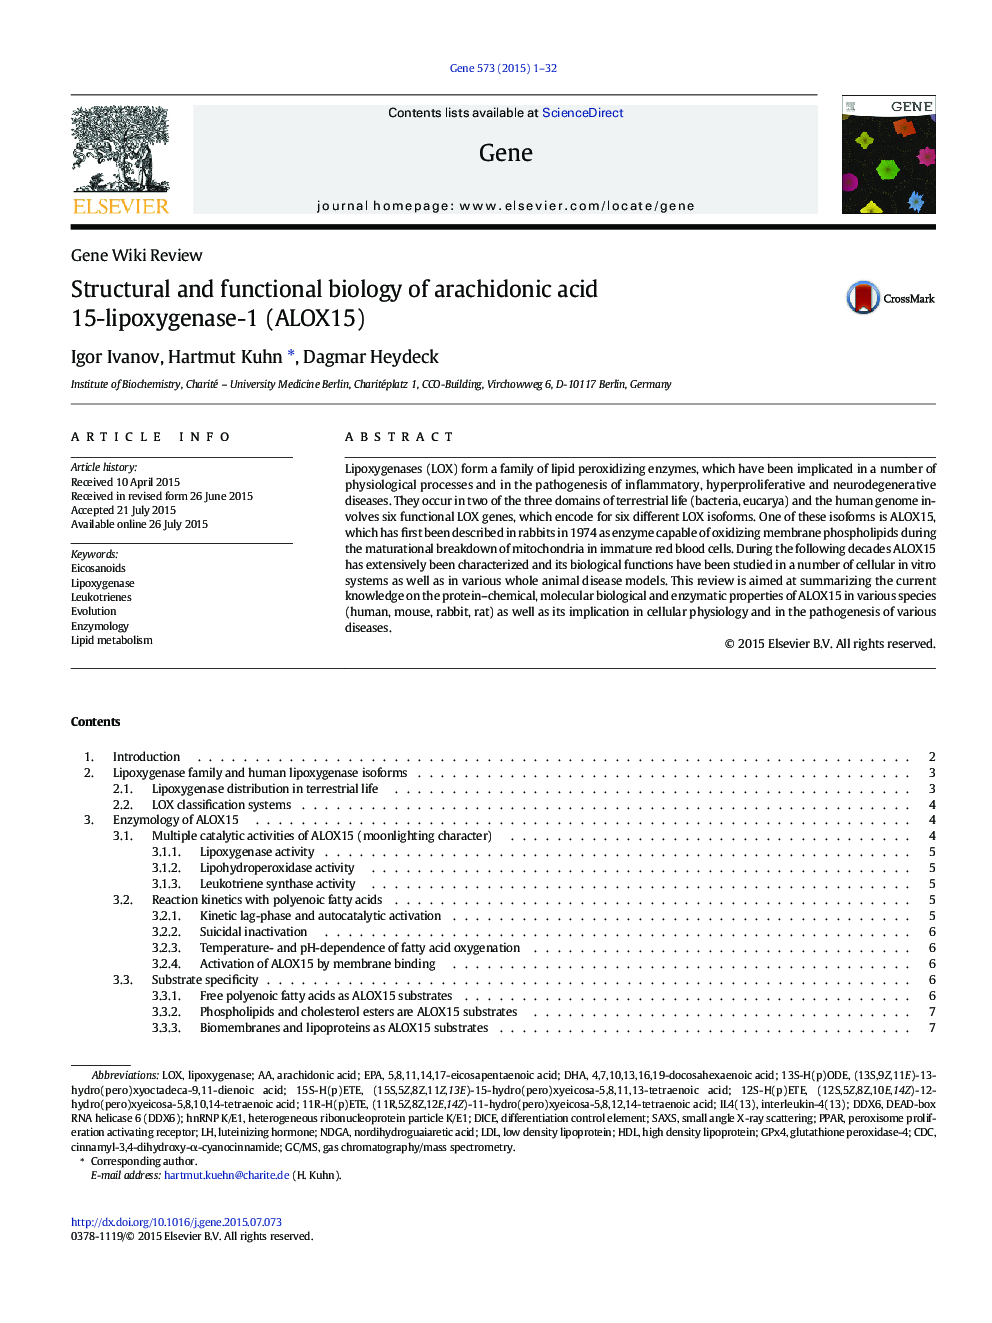 Structural and functional biology of arachidonic acid 15-lipoxygenase-1 (ALOX15)